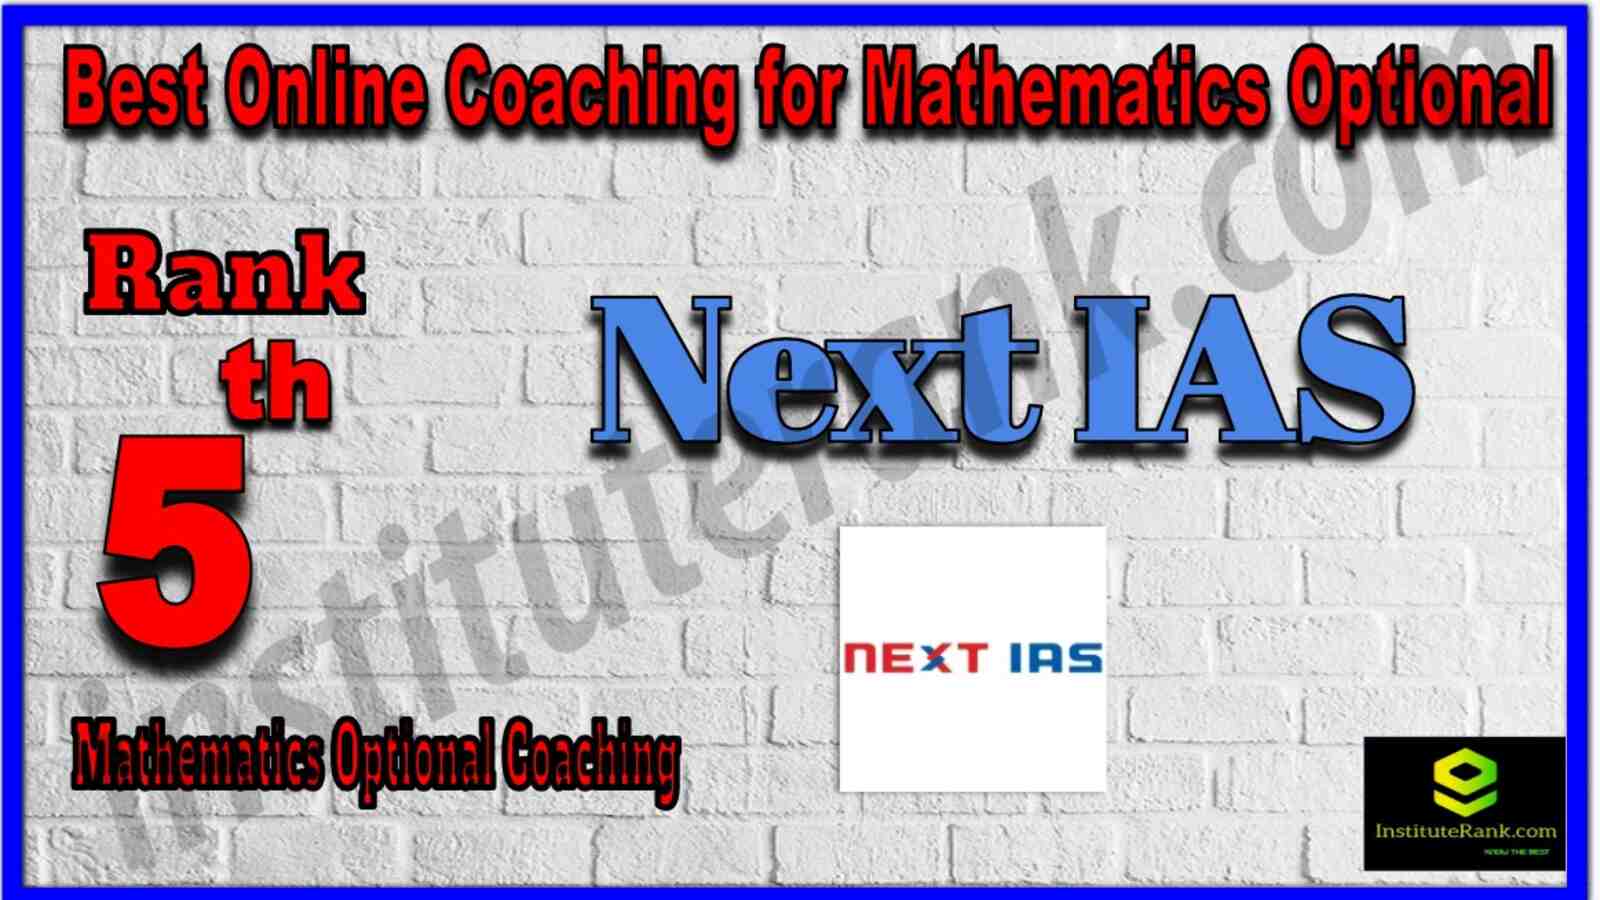 Rank 5 Best Online Coaching for Mathematics Optional